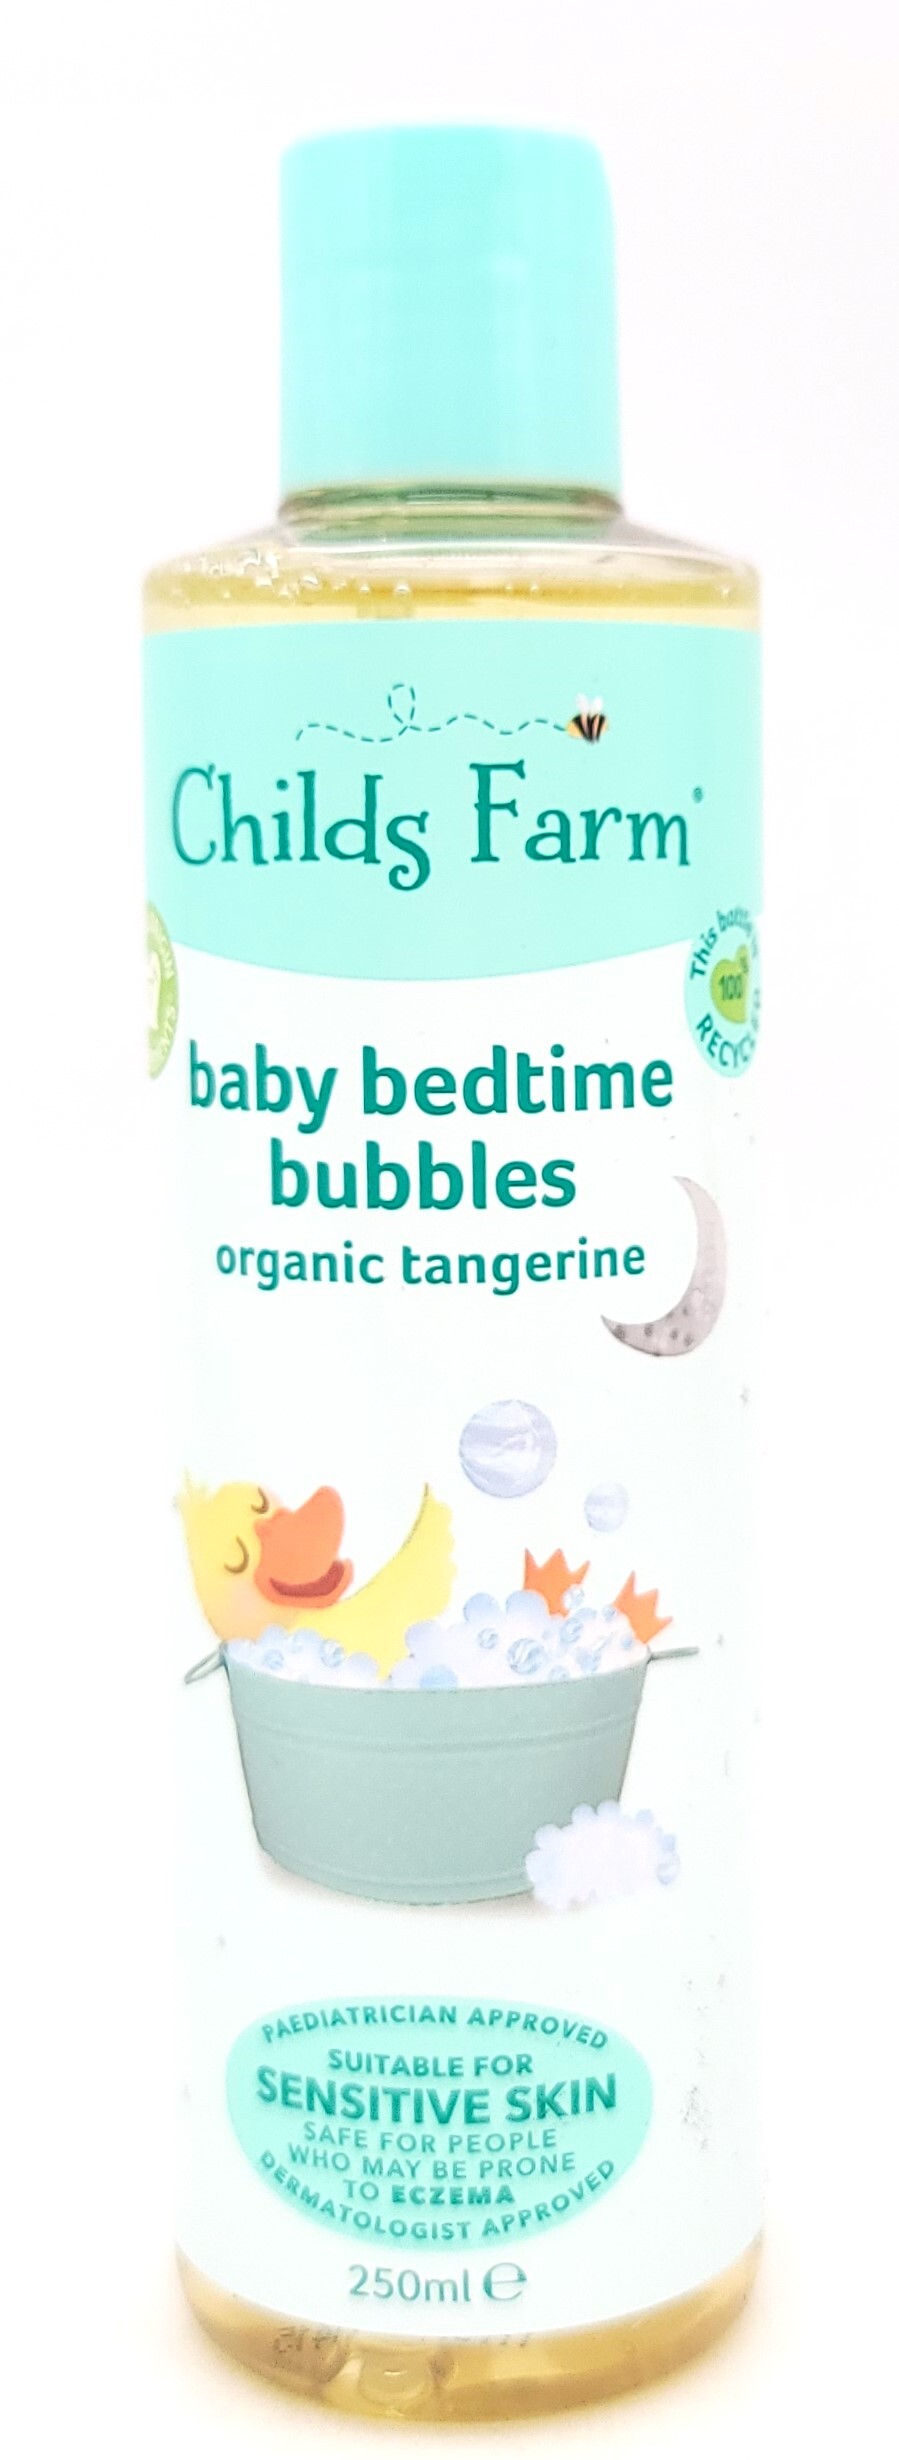 Childs Farm Baby Bedtime Bubbles 250ml-Organic Tangerine 1UNIT